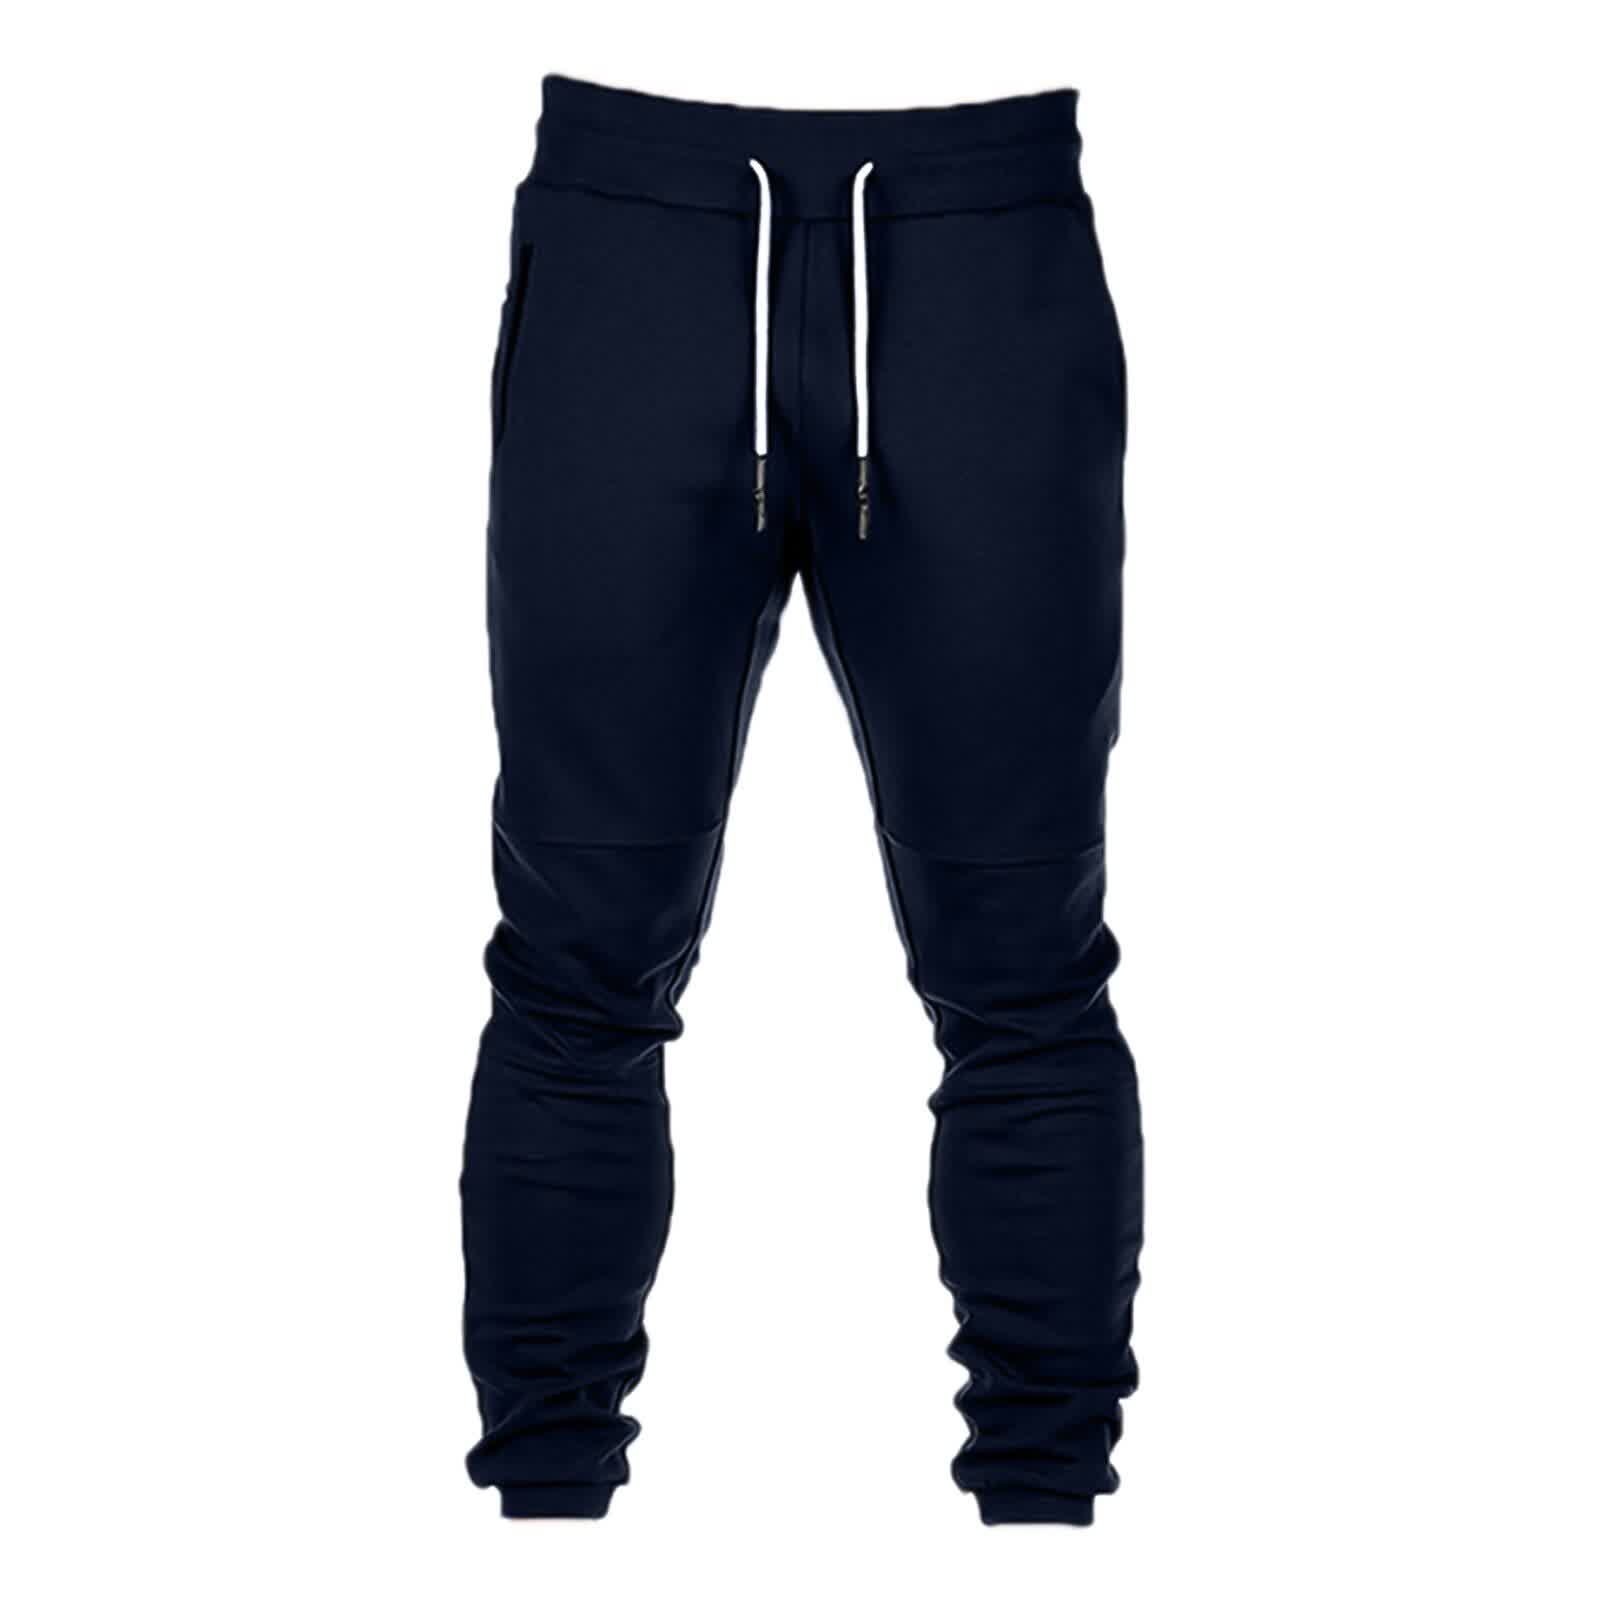 New Jogging Pants Men's Sports Running Pants Men Autumn Winter Drawstring Tights Zip Pockets Gym Pants Sportswear Trousers